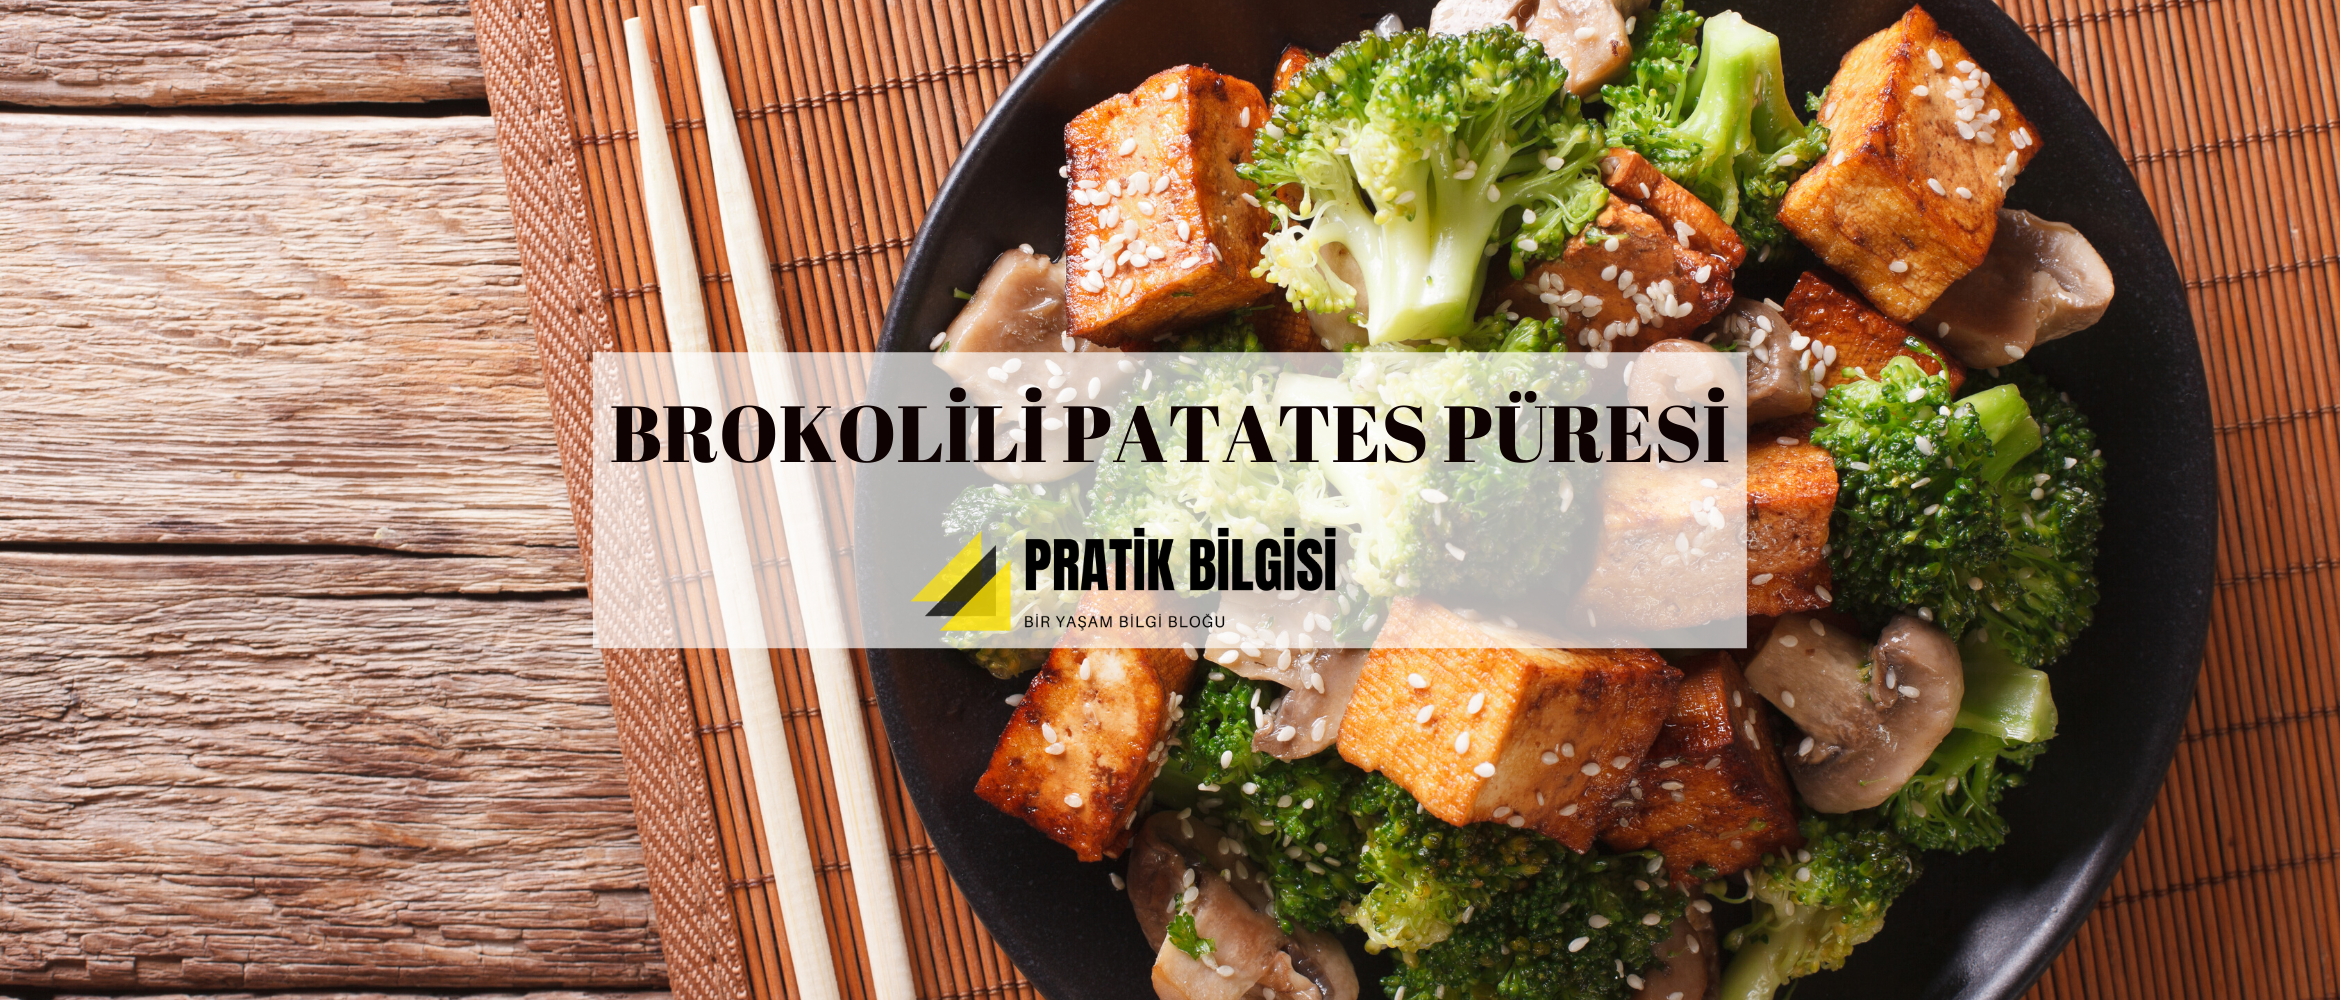 Brokolili Patates Püresi